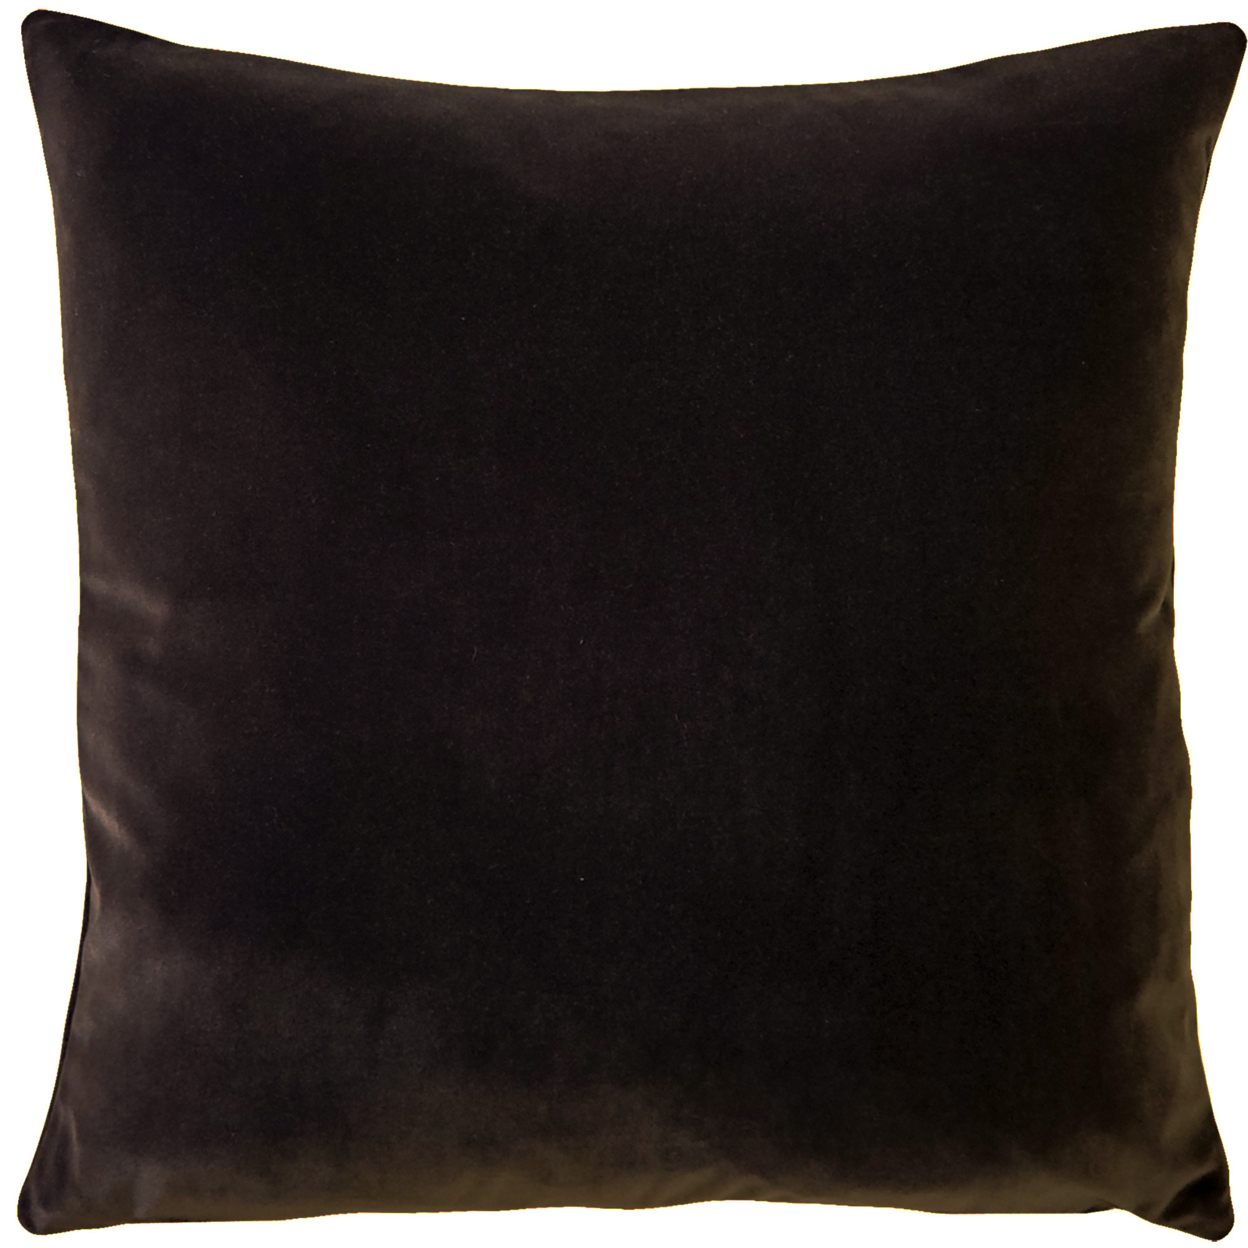 Castello Velvet Throw Pillows, Complete Pillow With Polyfill Pillow Insert (18 Colors, 3 Sizes) - Sedona Orange, 17x17